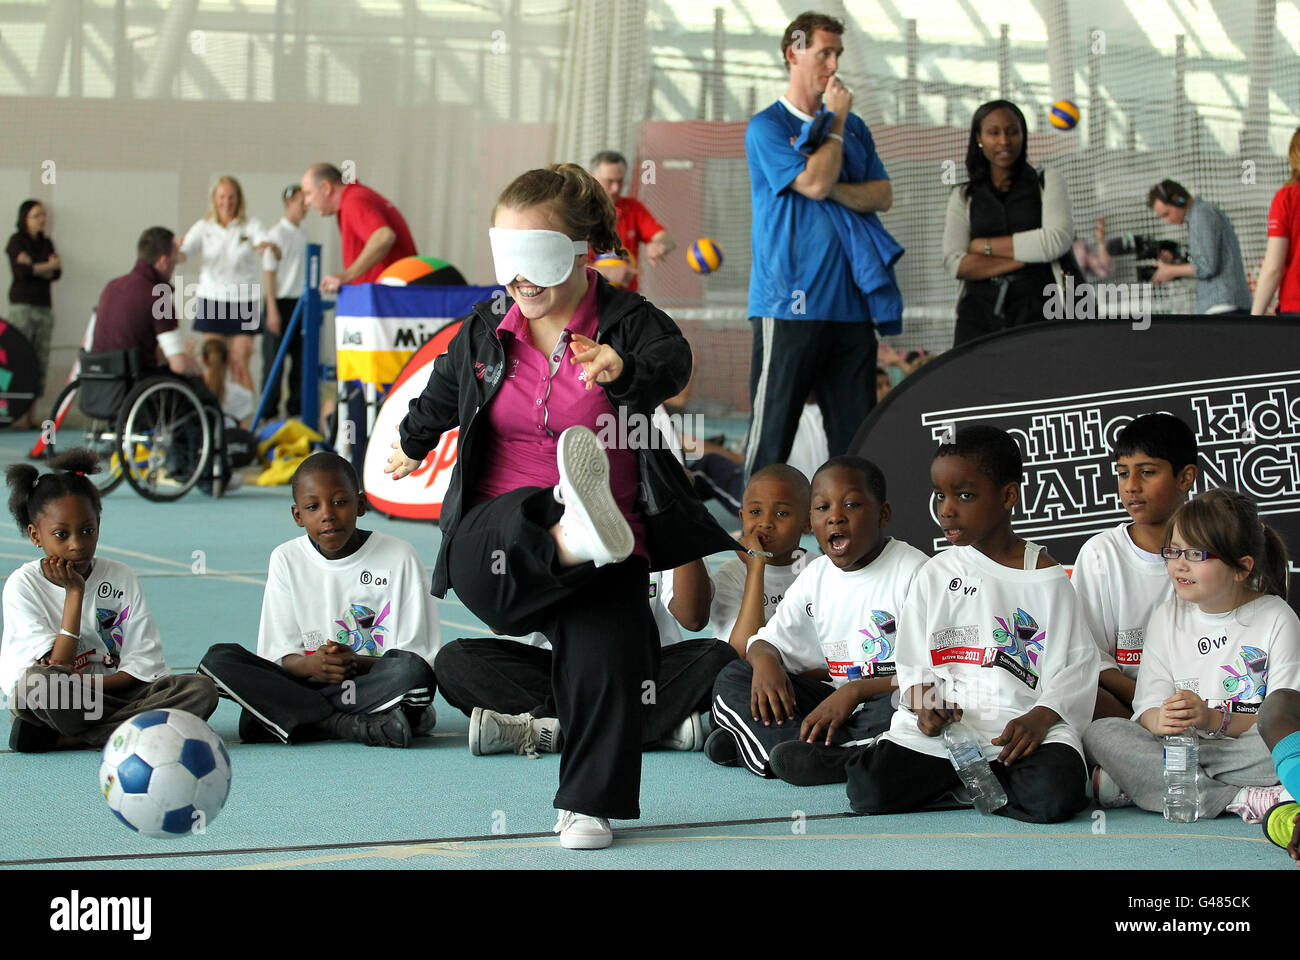 Paralympics - Sainsburys 1 Million Kids Challenge Launch - Lee Valley Athletics Centre Stock Photo